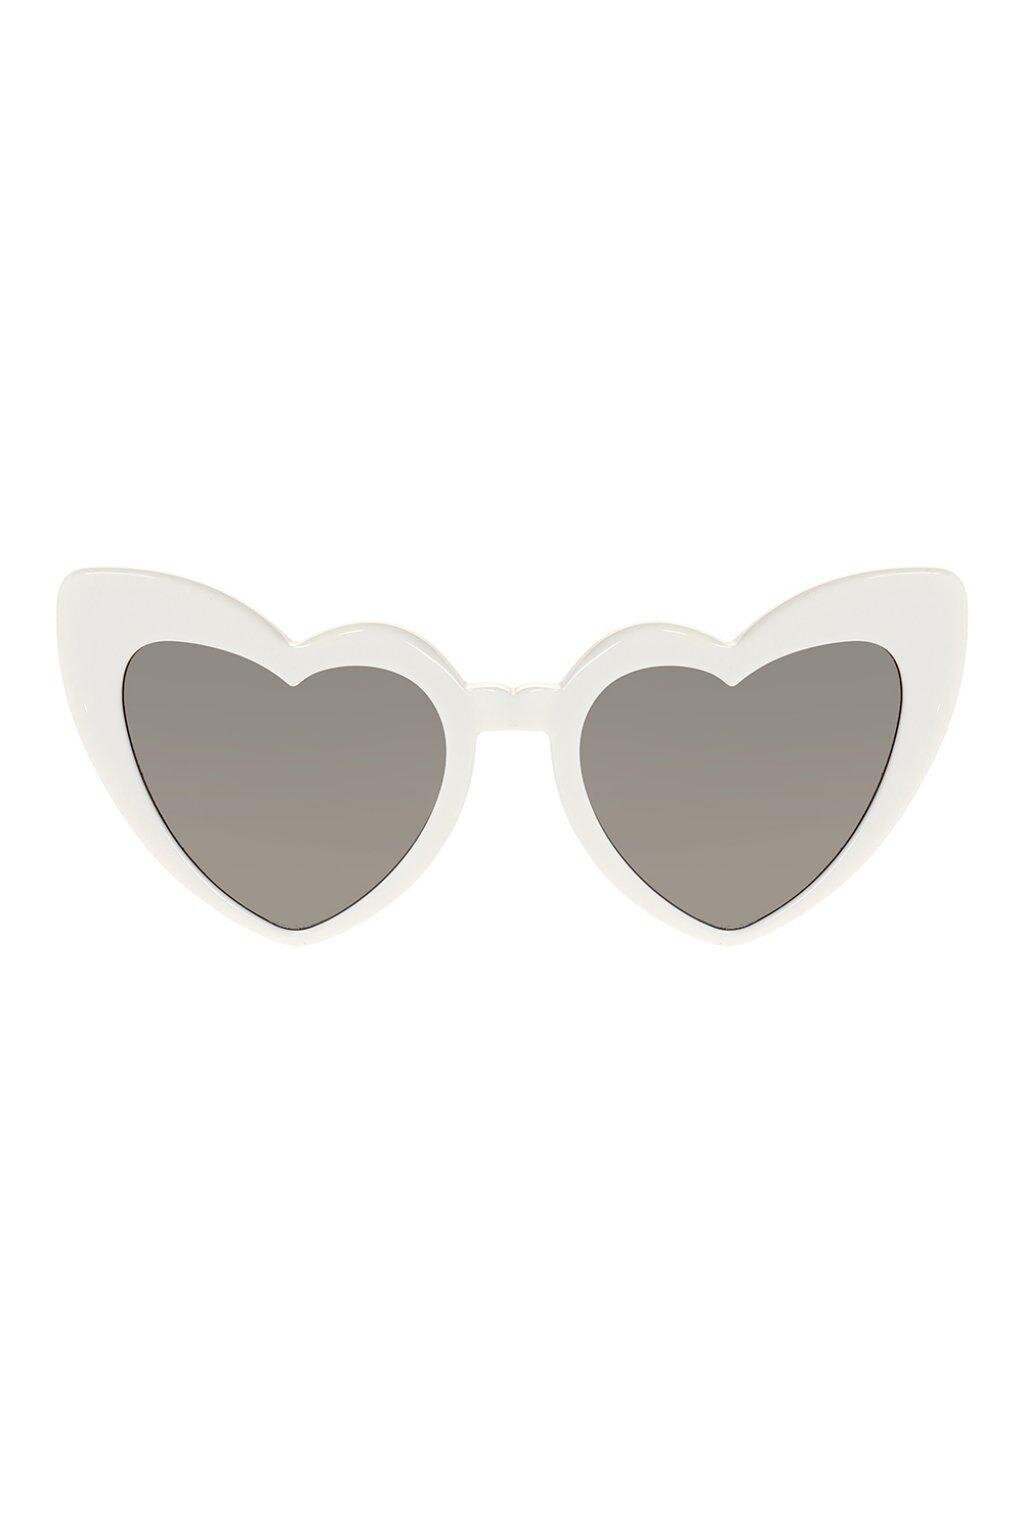 Saint Laurent LouLou Heart Shaped Sunglasses in White.jpg